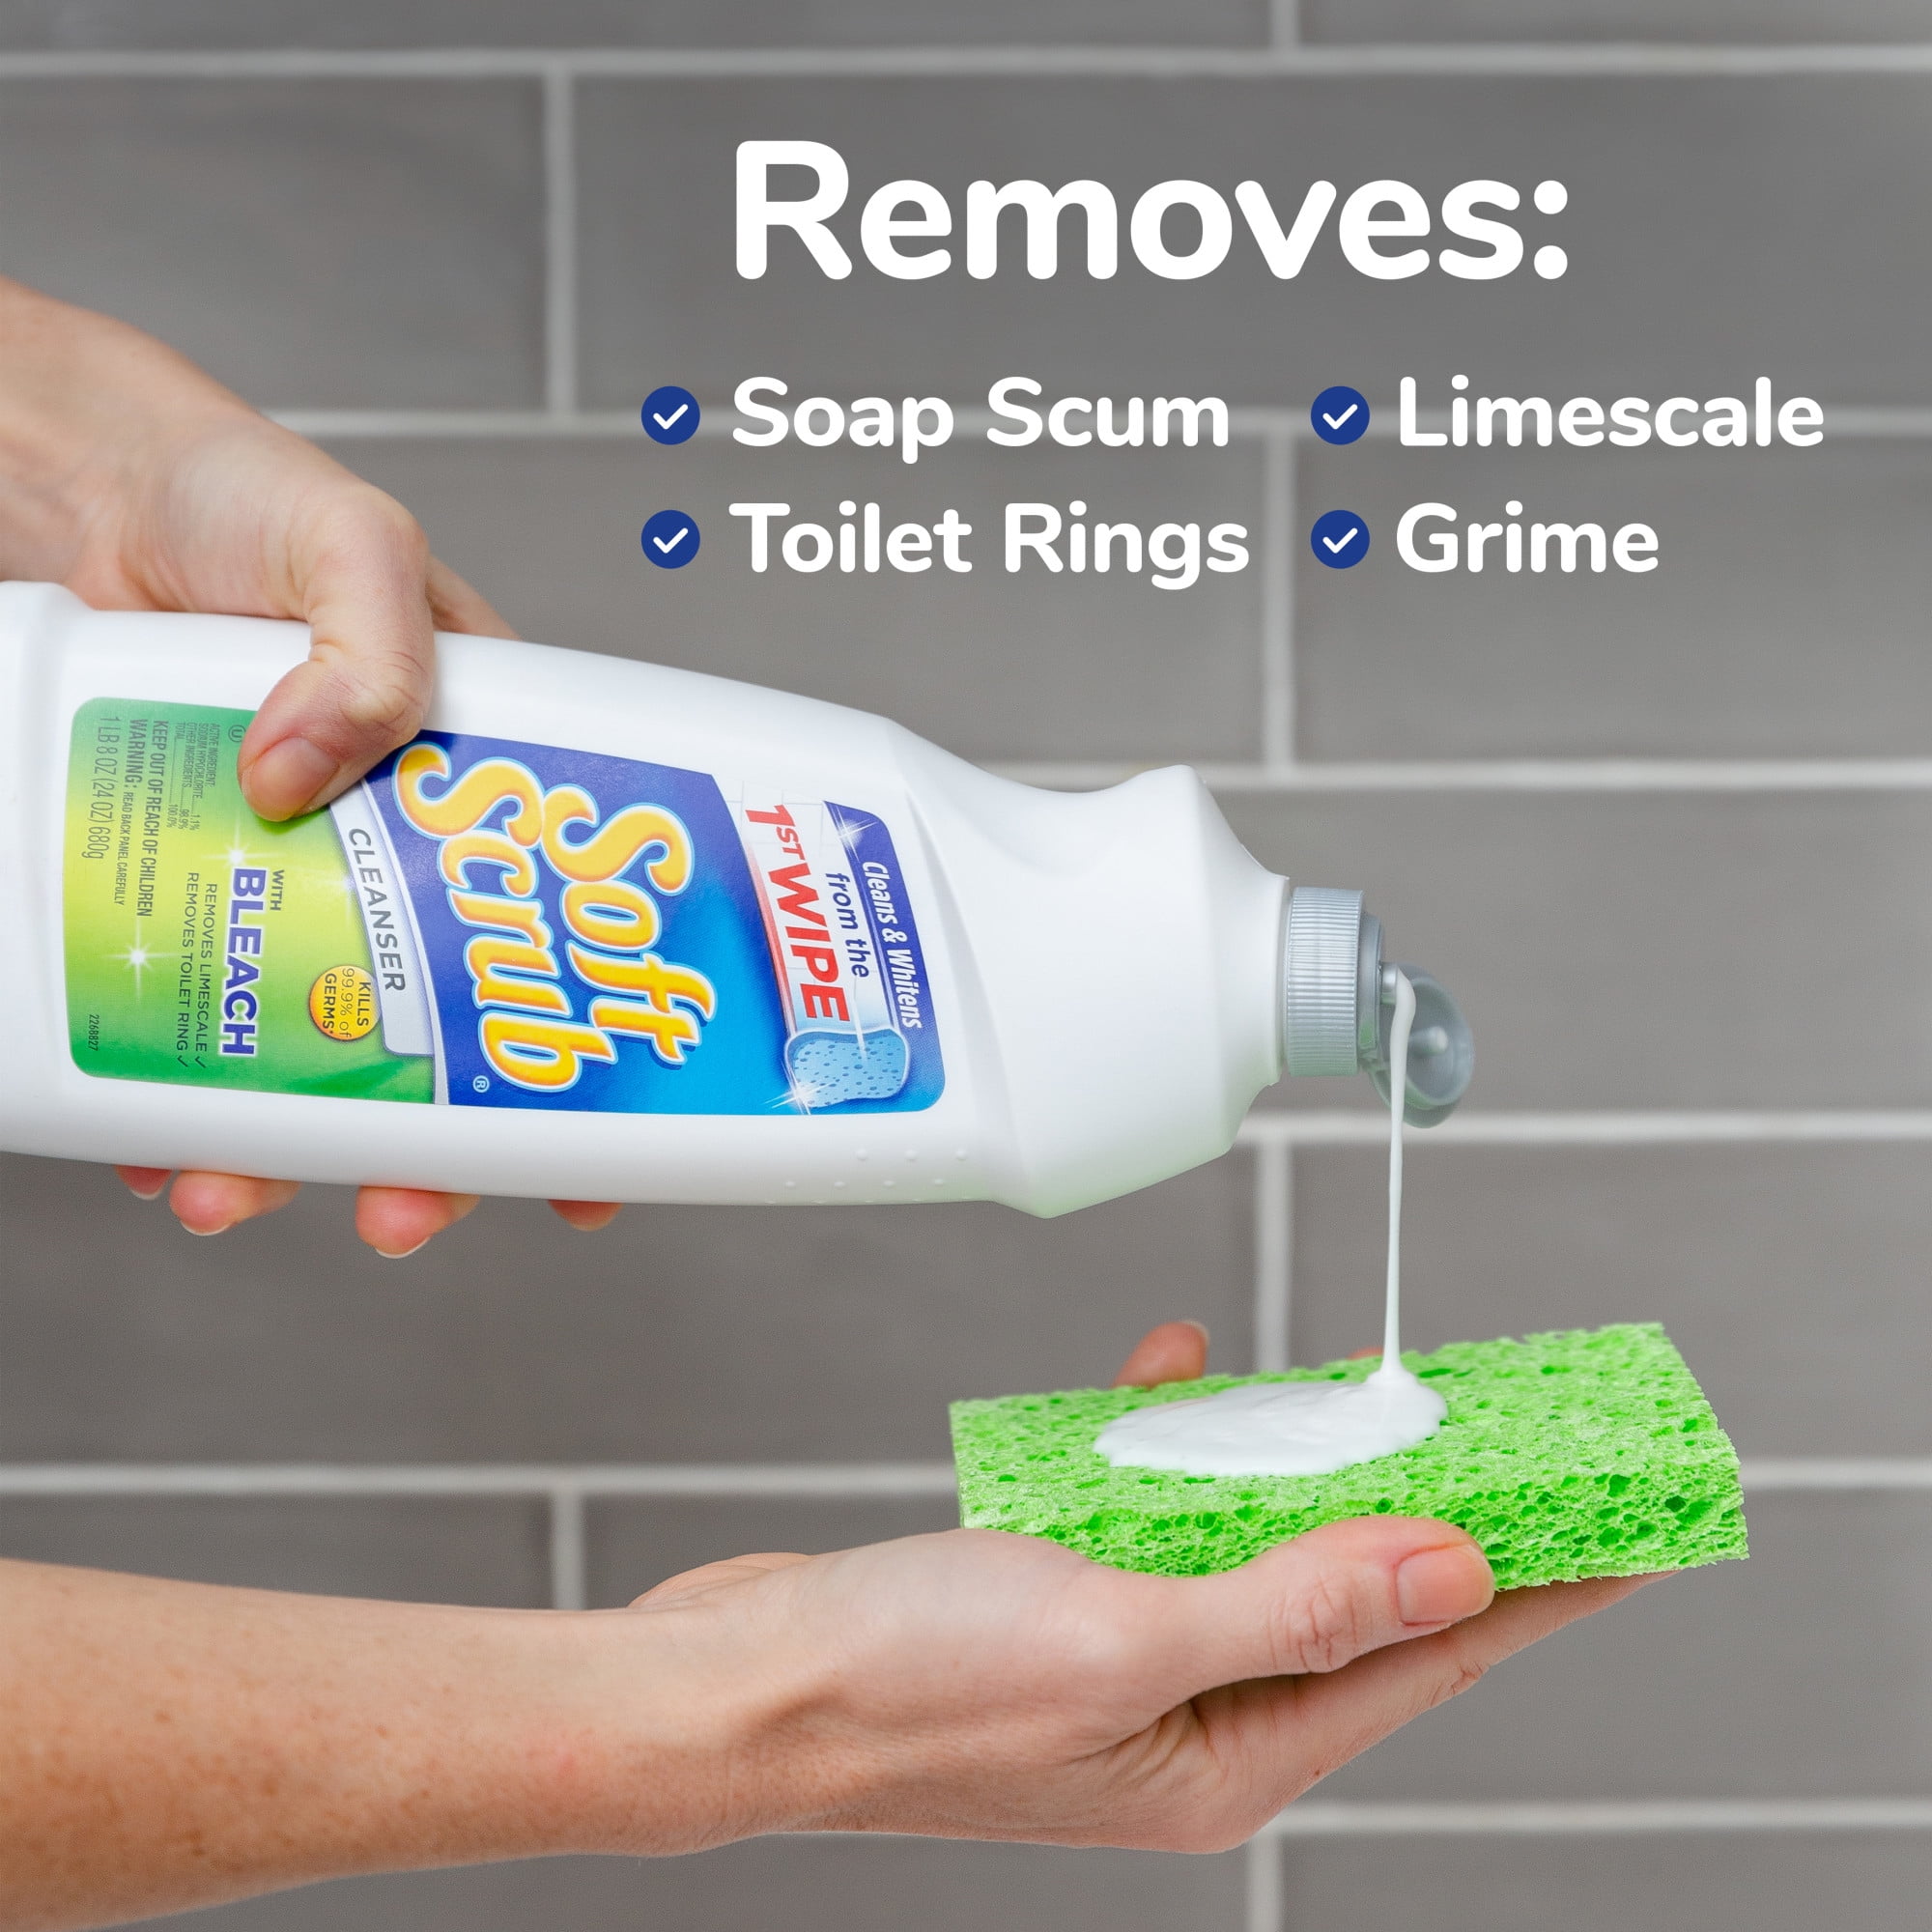 Soft Scrub 36 oz. Commercial Lemon Cleanser 2049682 - The Home Depot